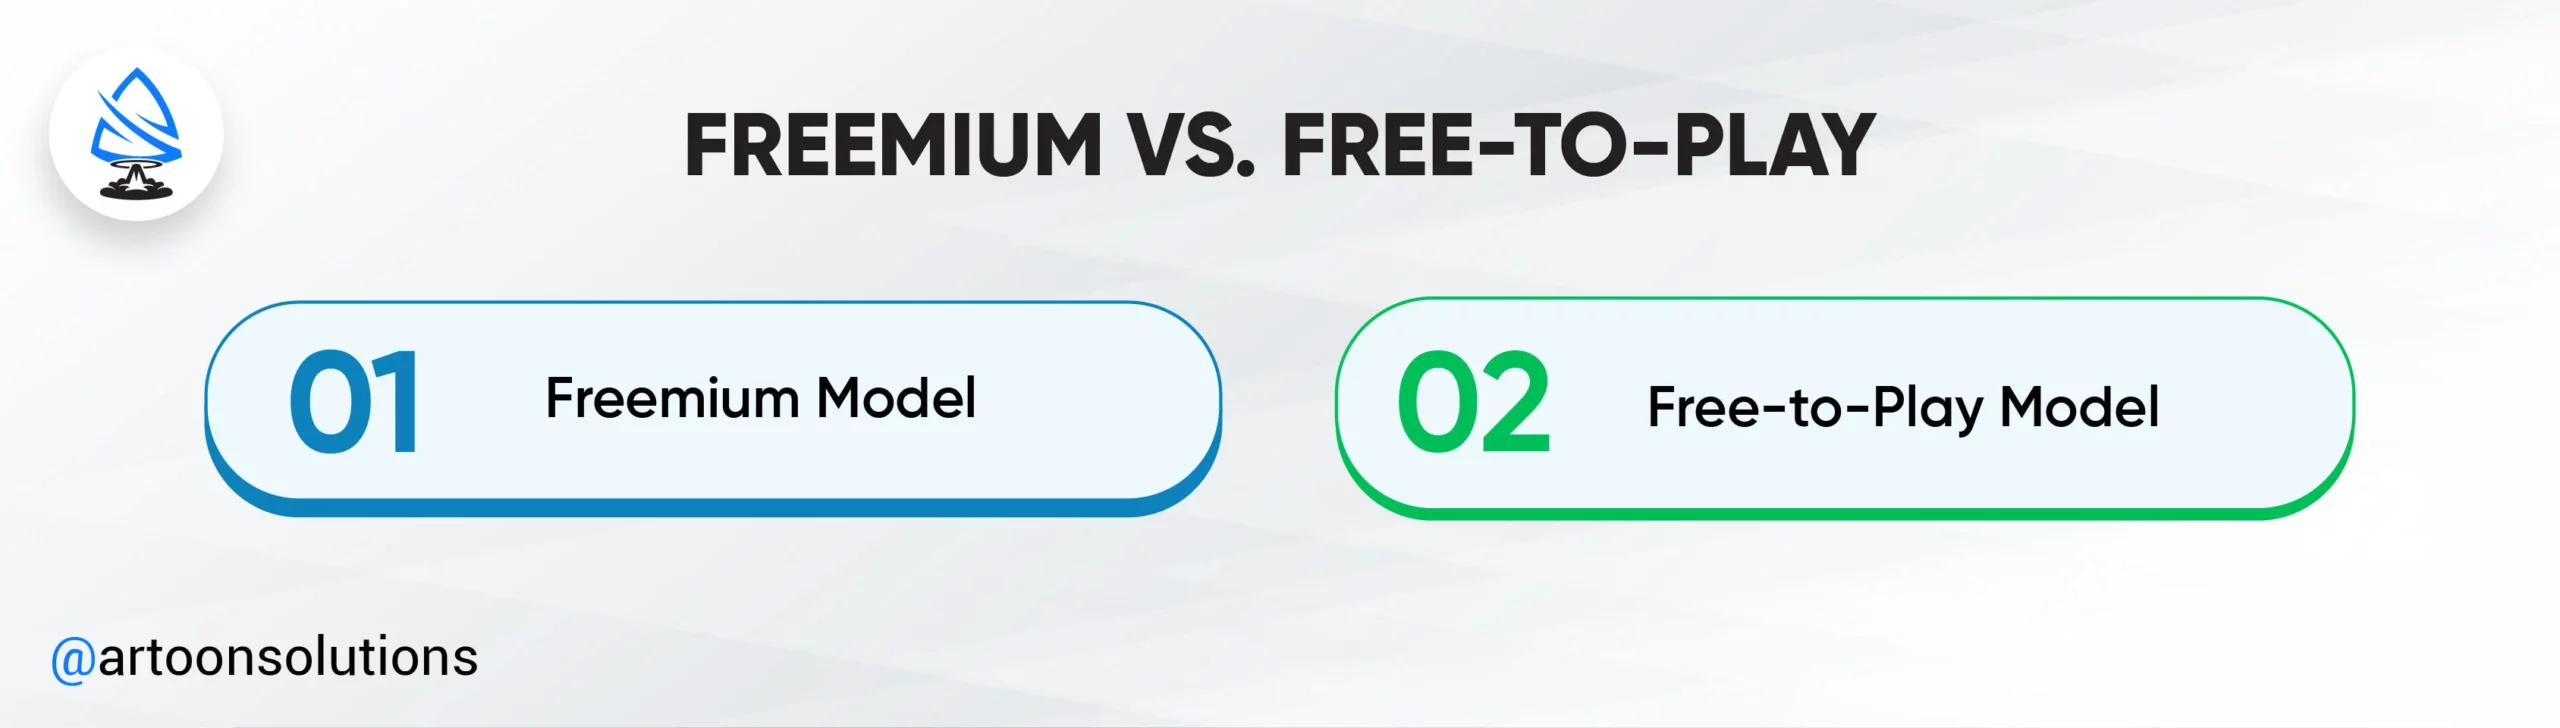 Freemium vs. Free-to-Play